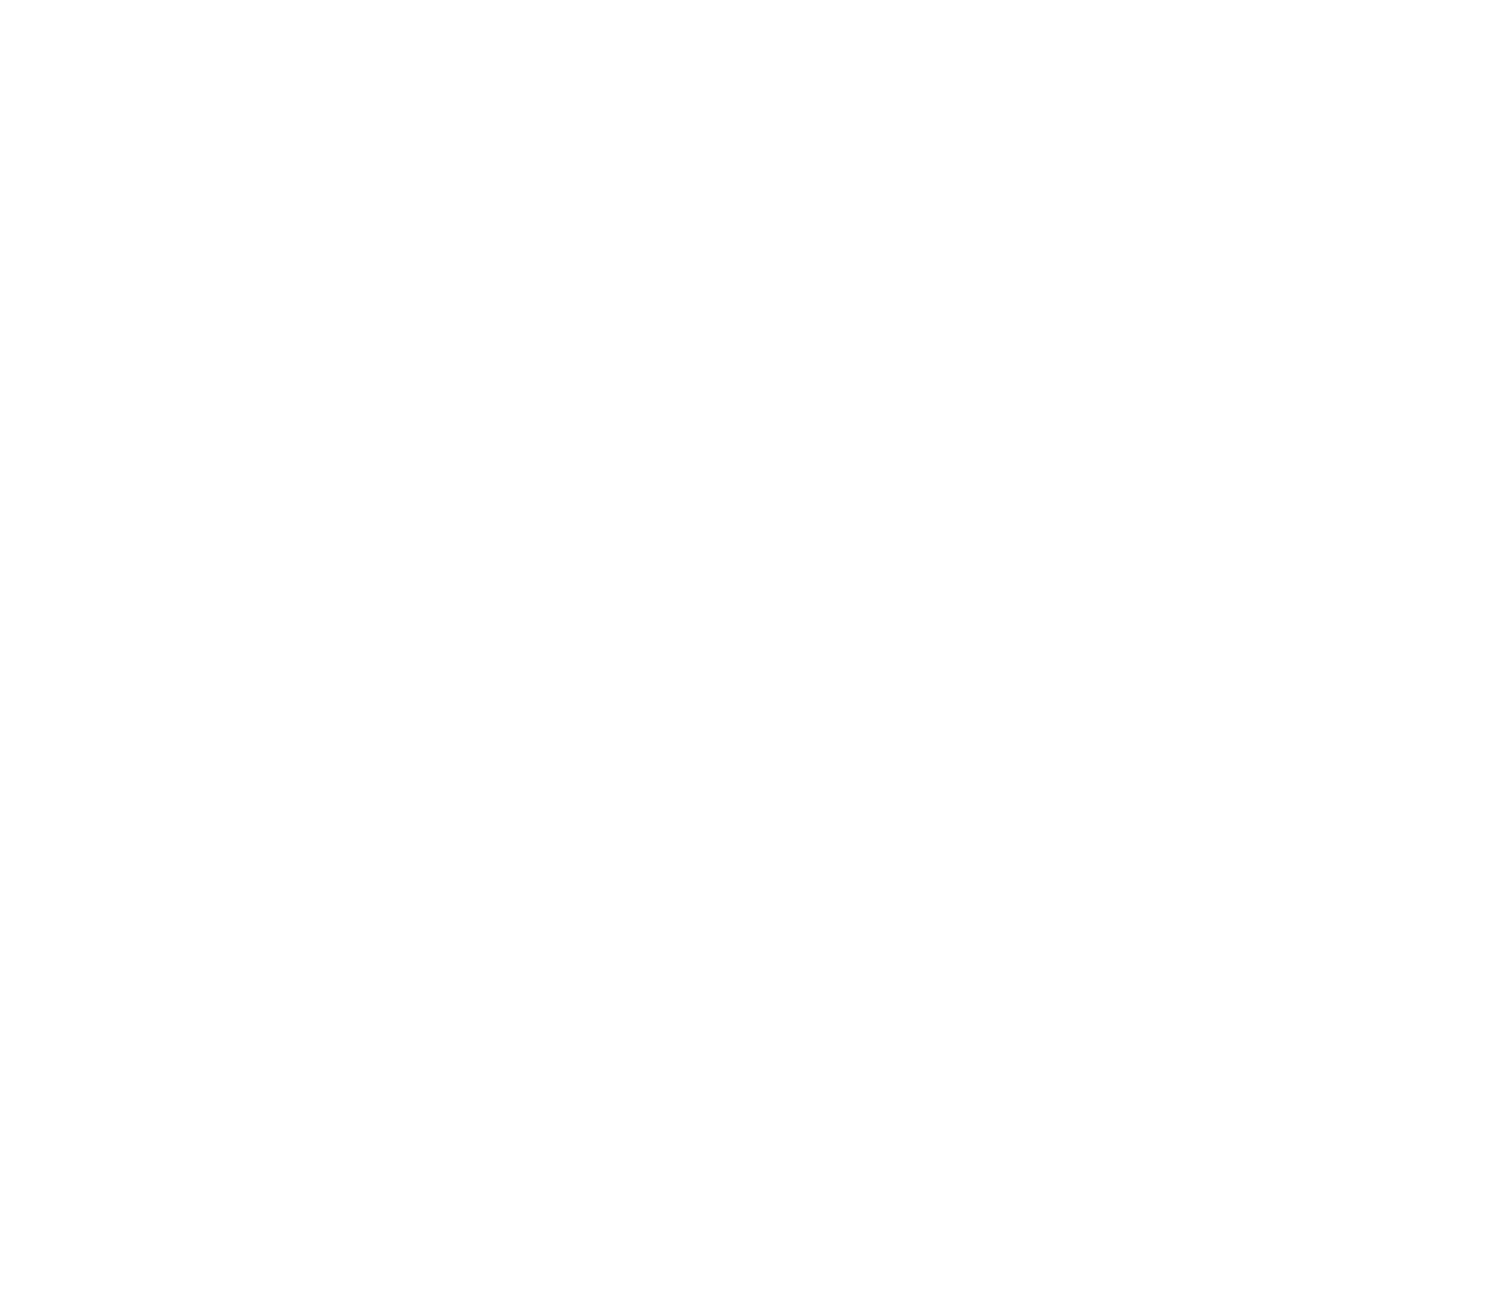  Laurel Hill Farm | Weddings & Events | Horse Stables & Boarding | Hay